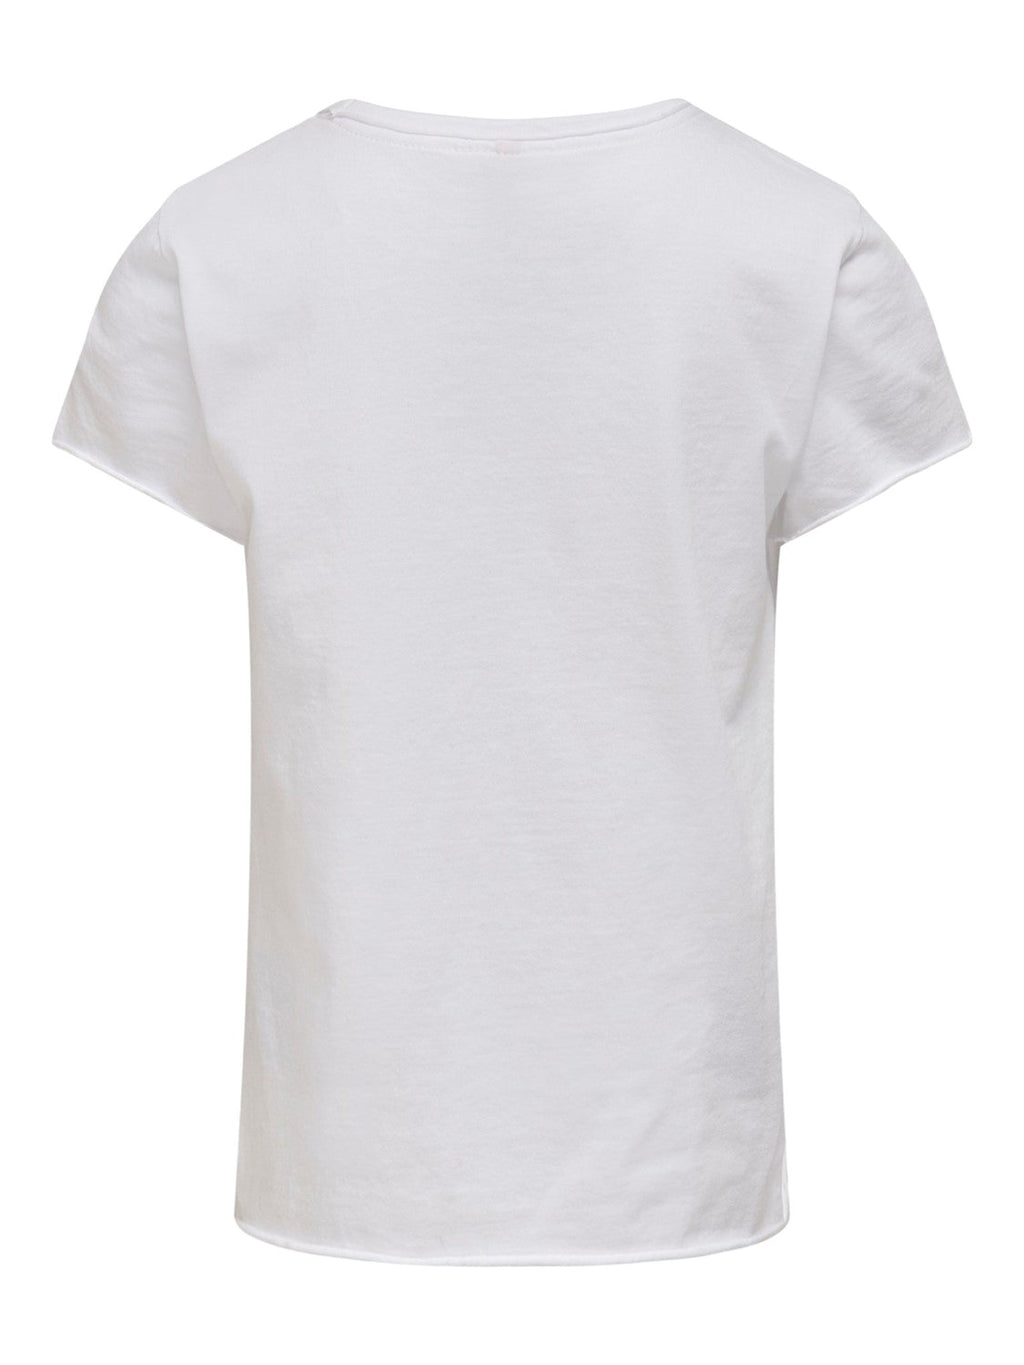 Lucy World Tour T-shirt - White